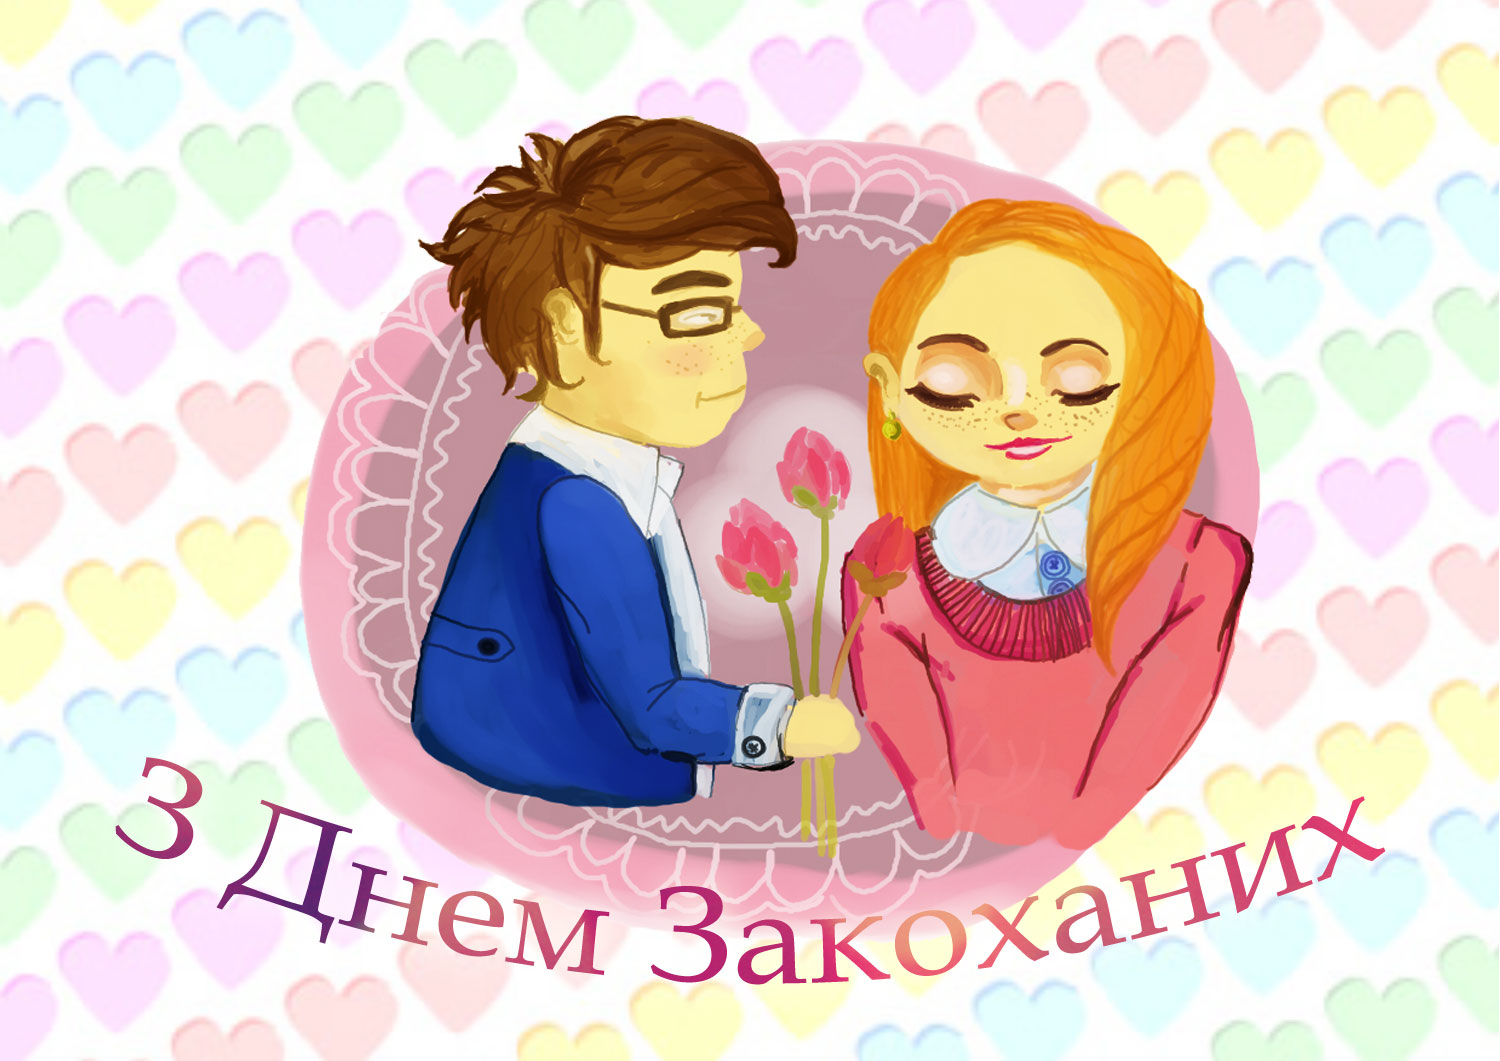 И мама молода закохана. Вітання з днем закоханих. З днем закоханих привітання українською мовою. С днем закоханих на українській мові. З днем закоханих картинки на украинском.